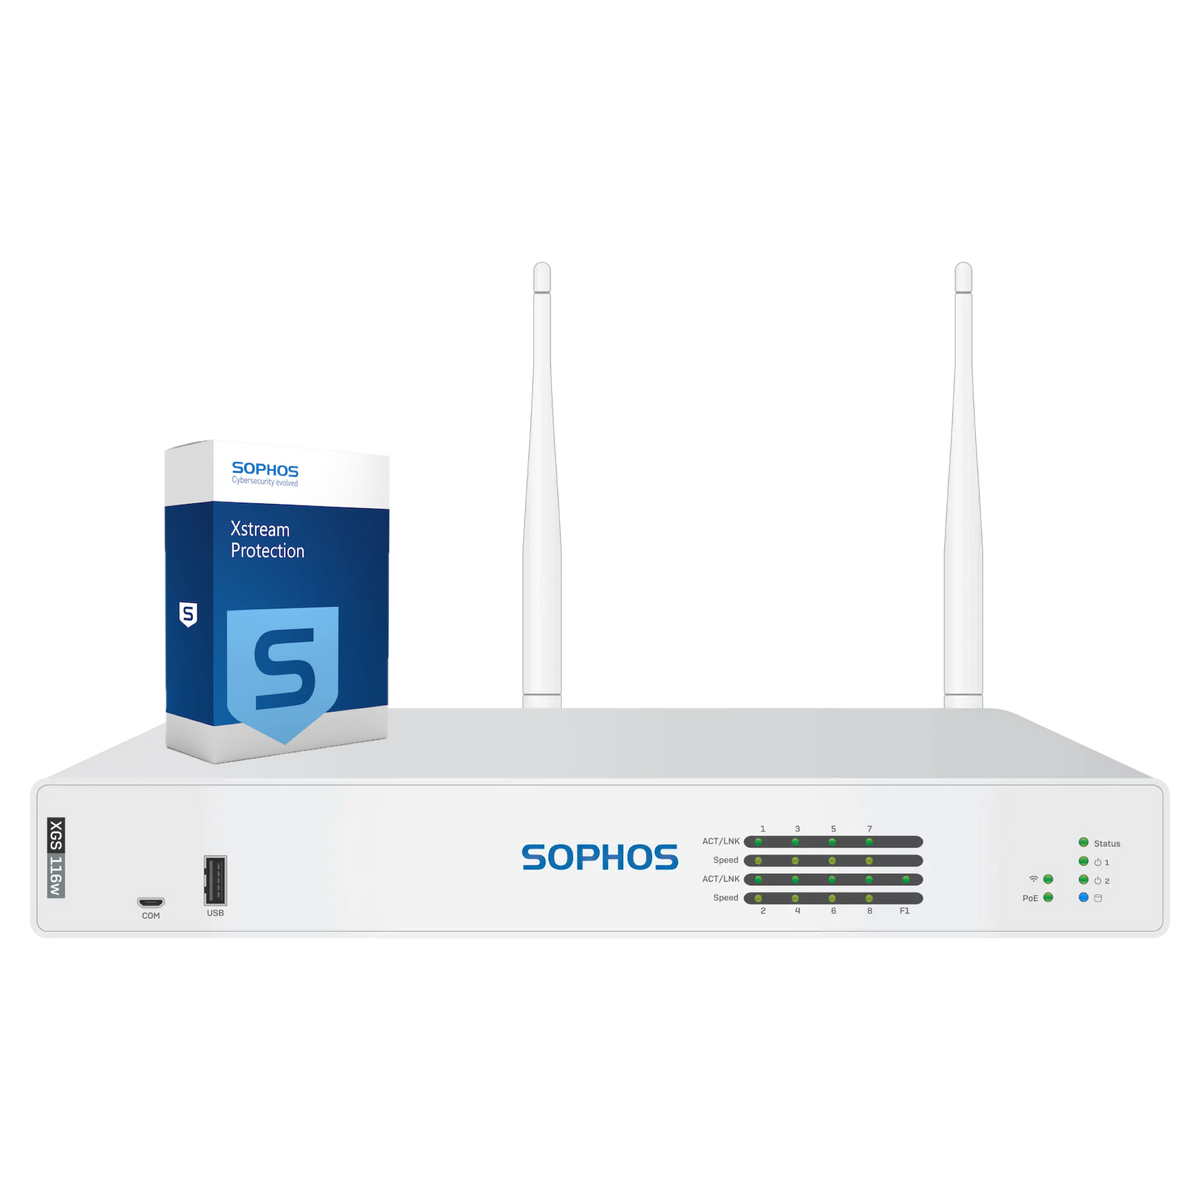 Sophos XGS 116w Firewall with Xstream Protection, 3-year - EU power cord